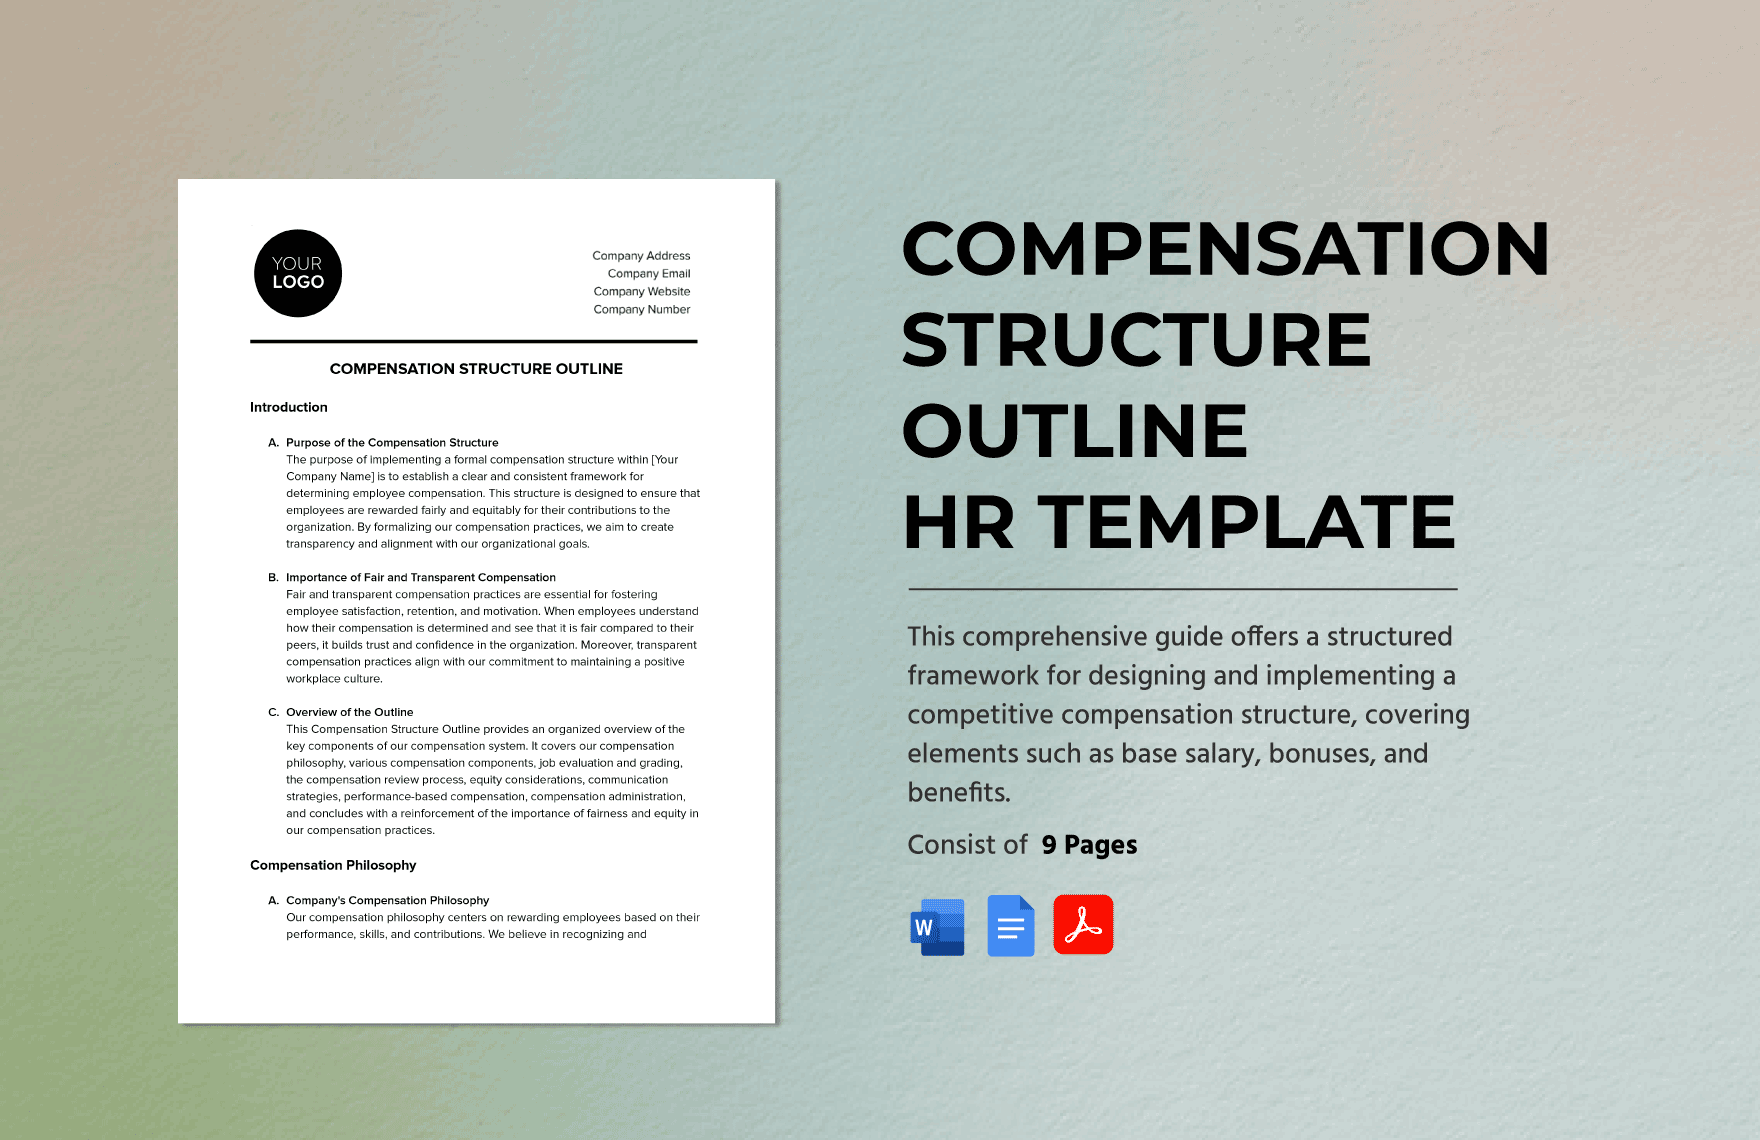 Compensation Structure Outline HR Template